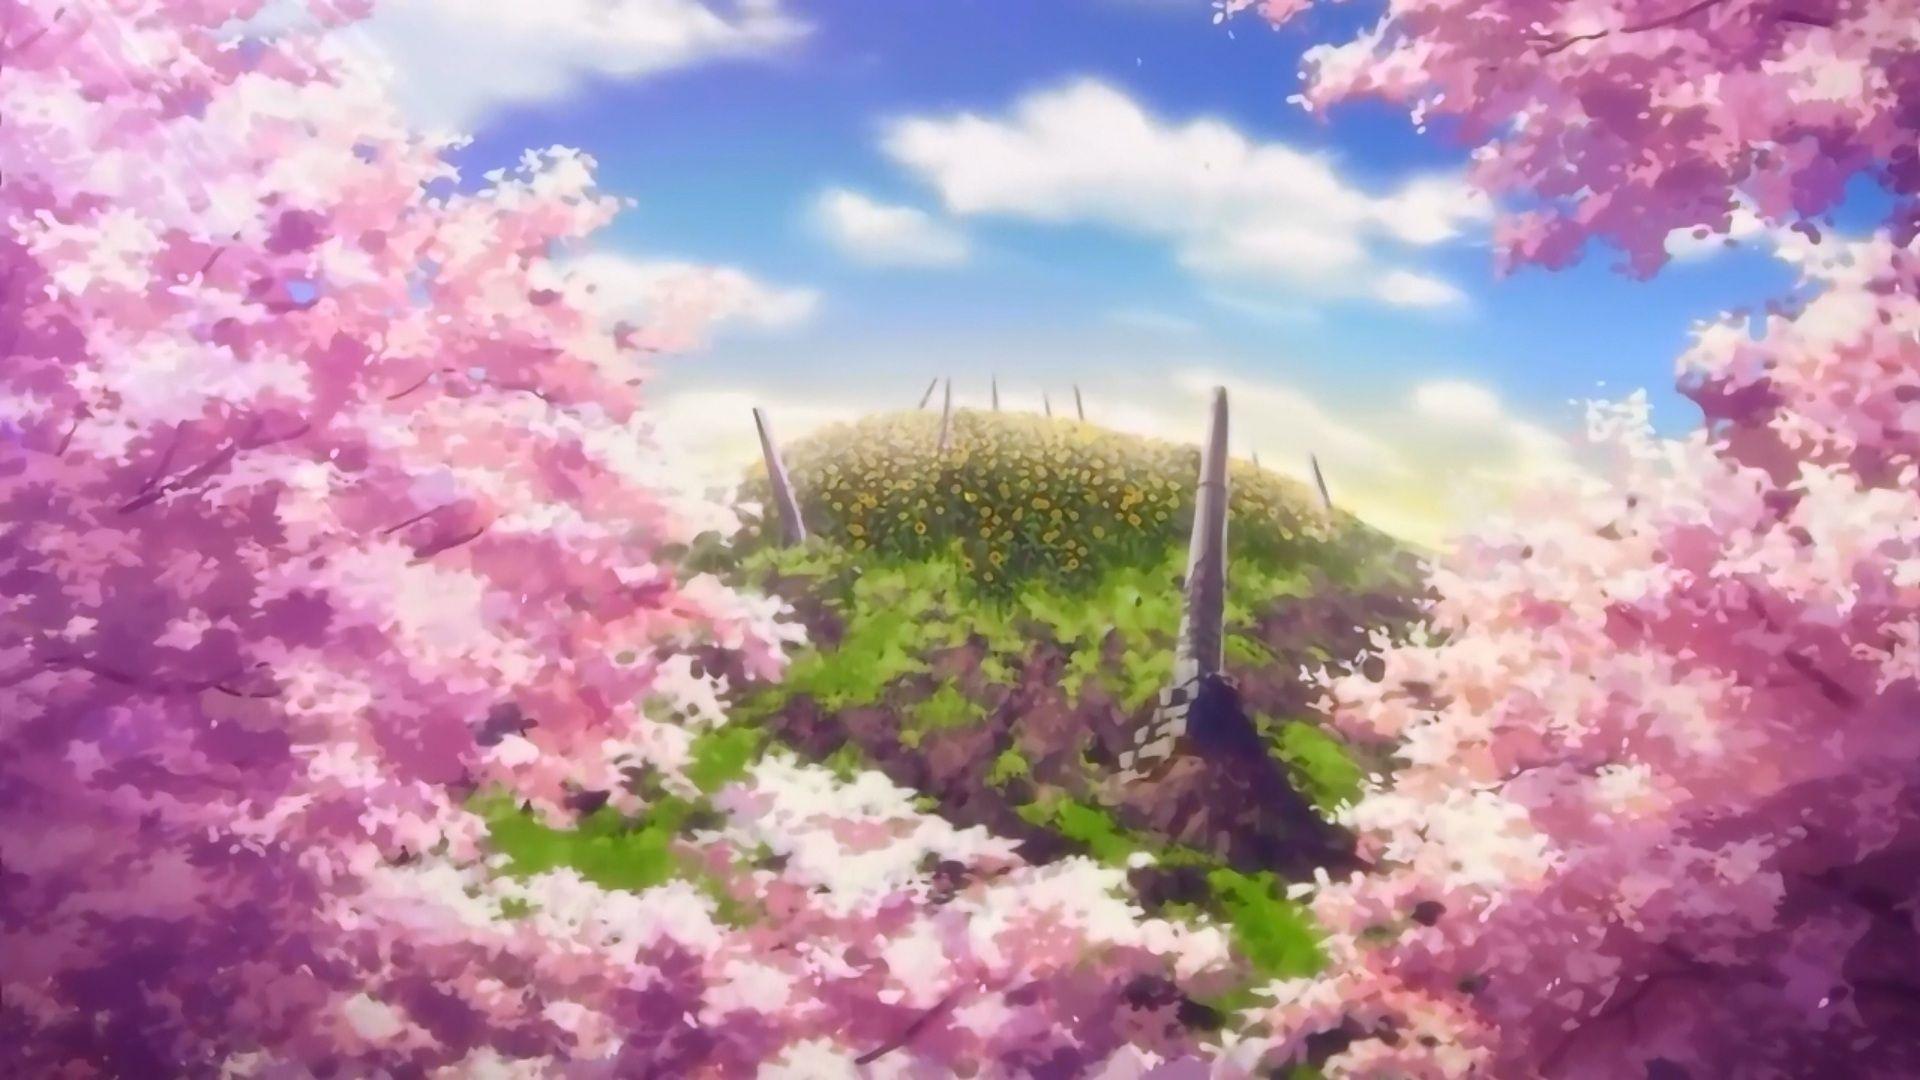 Anime Scenery wallpaper. Anime scenery, Anime scenery wallpaper